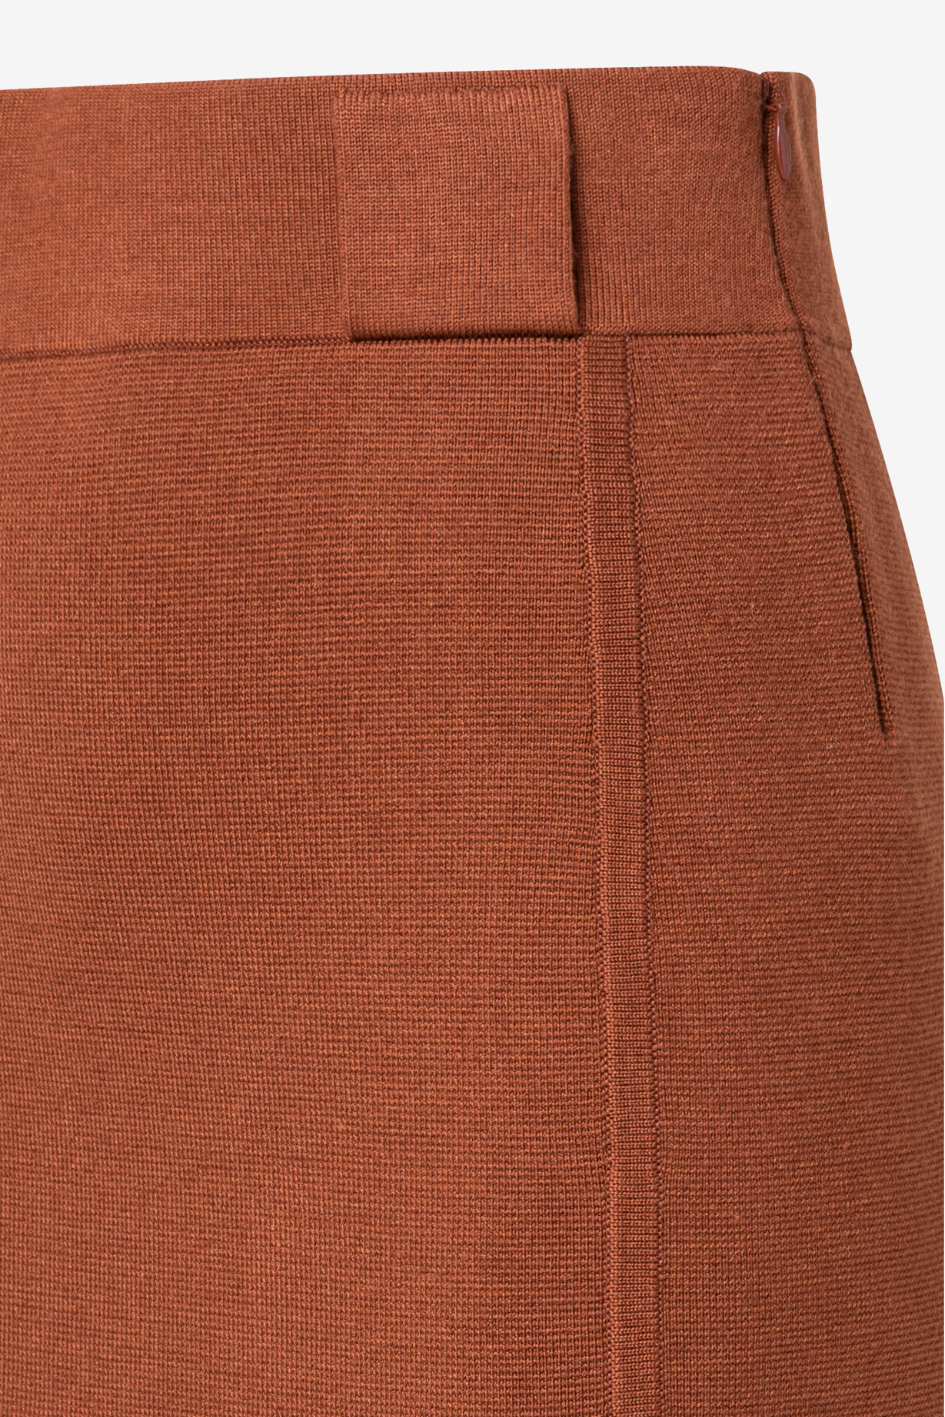 Wool silk stretch Pencil Skirt